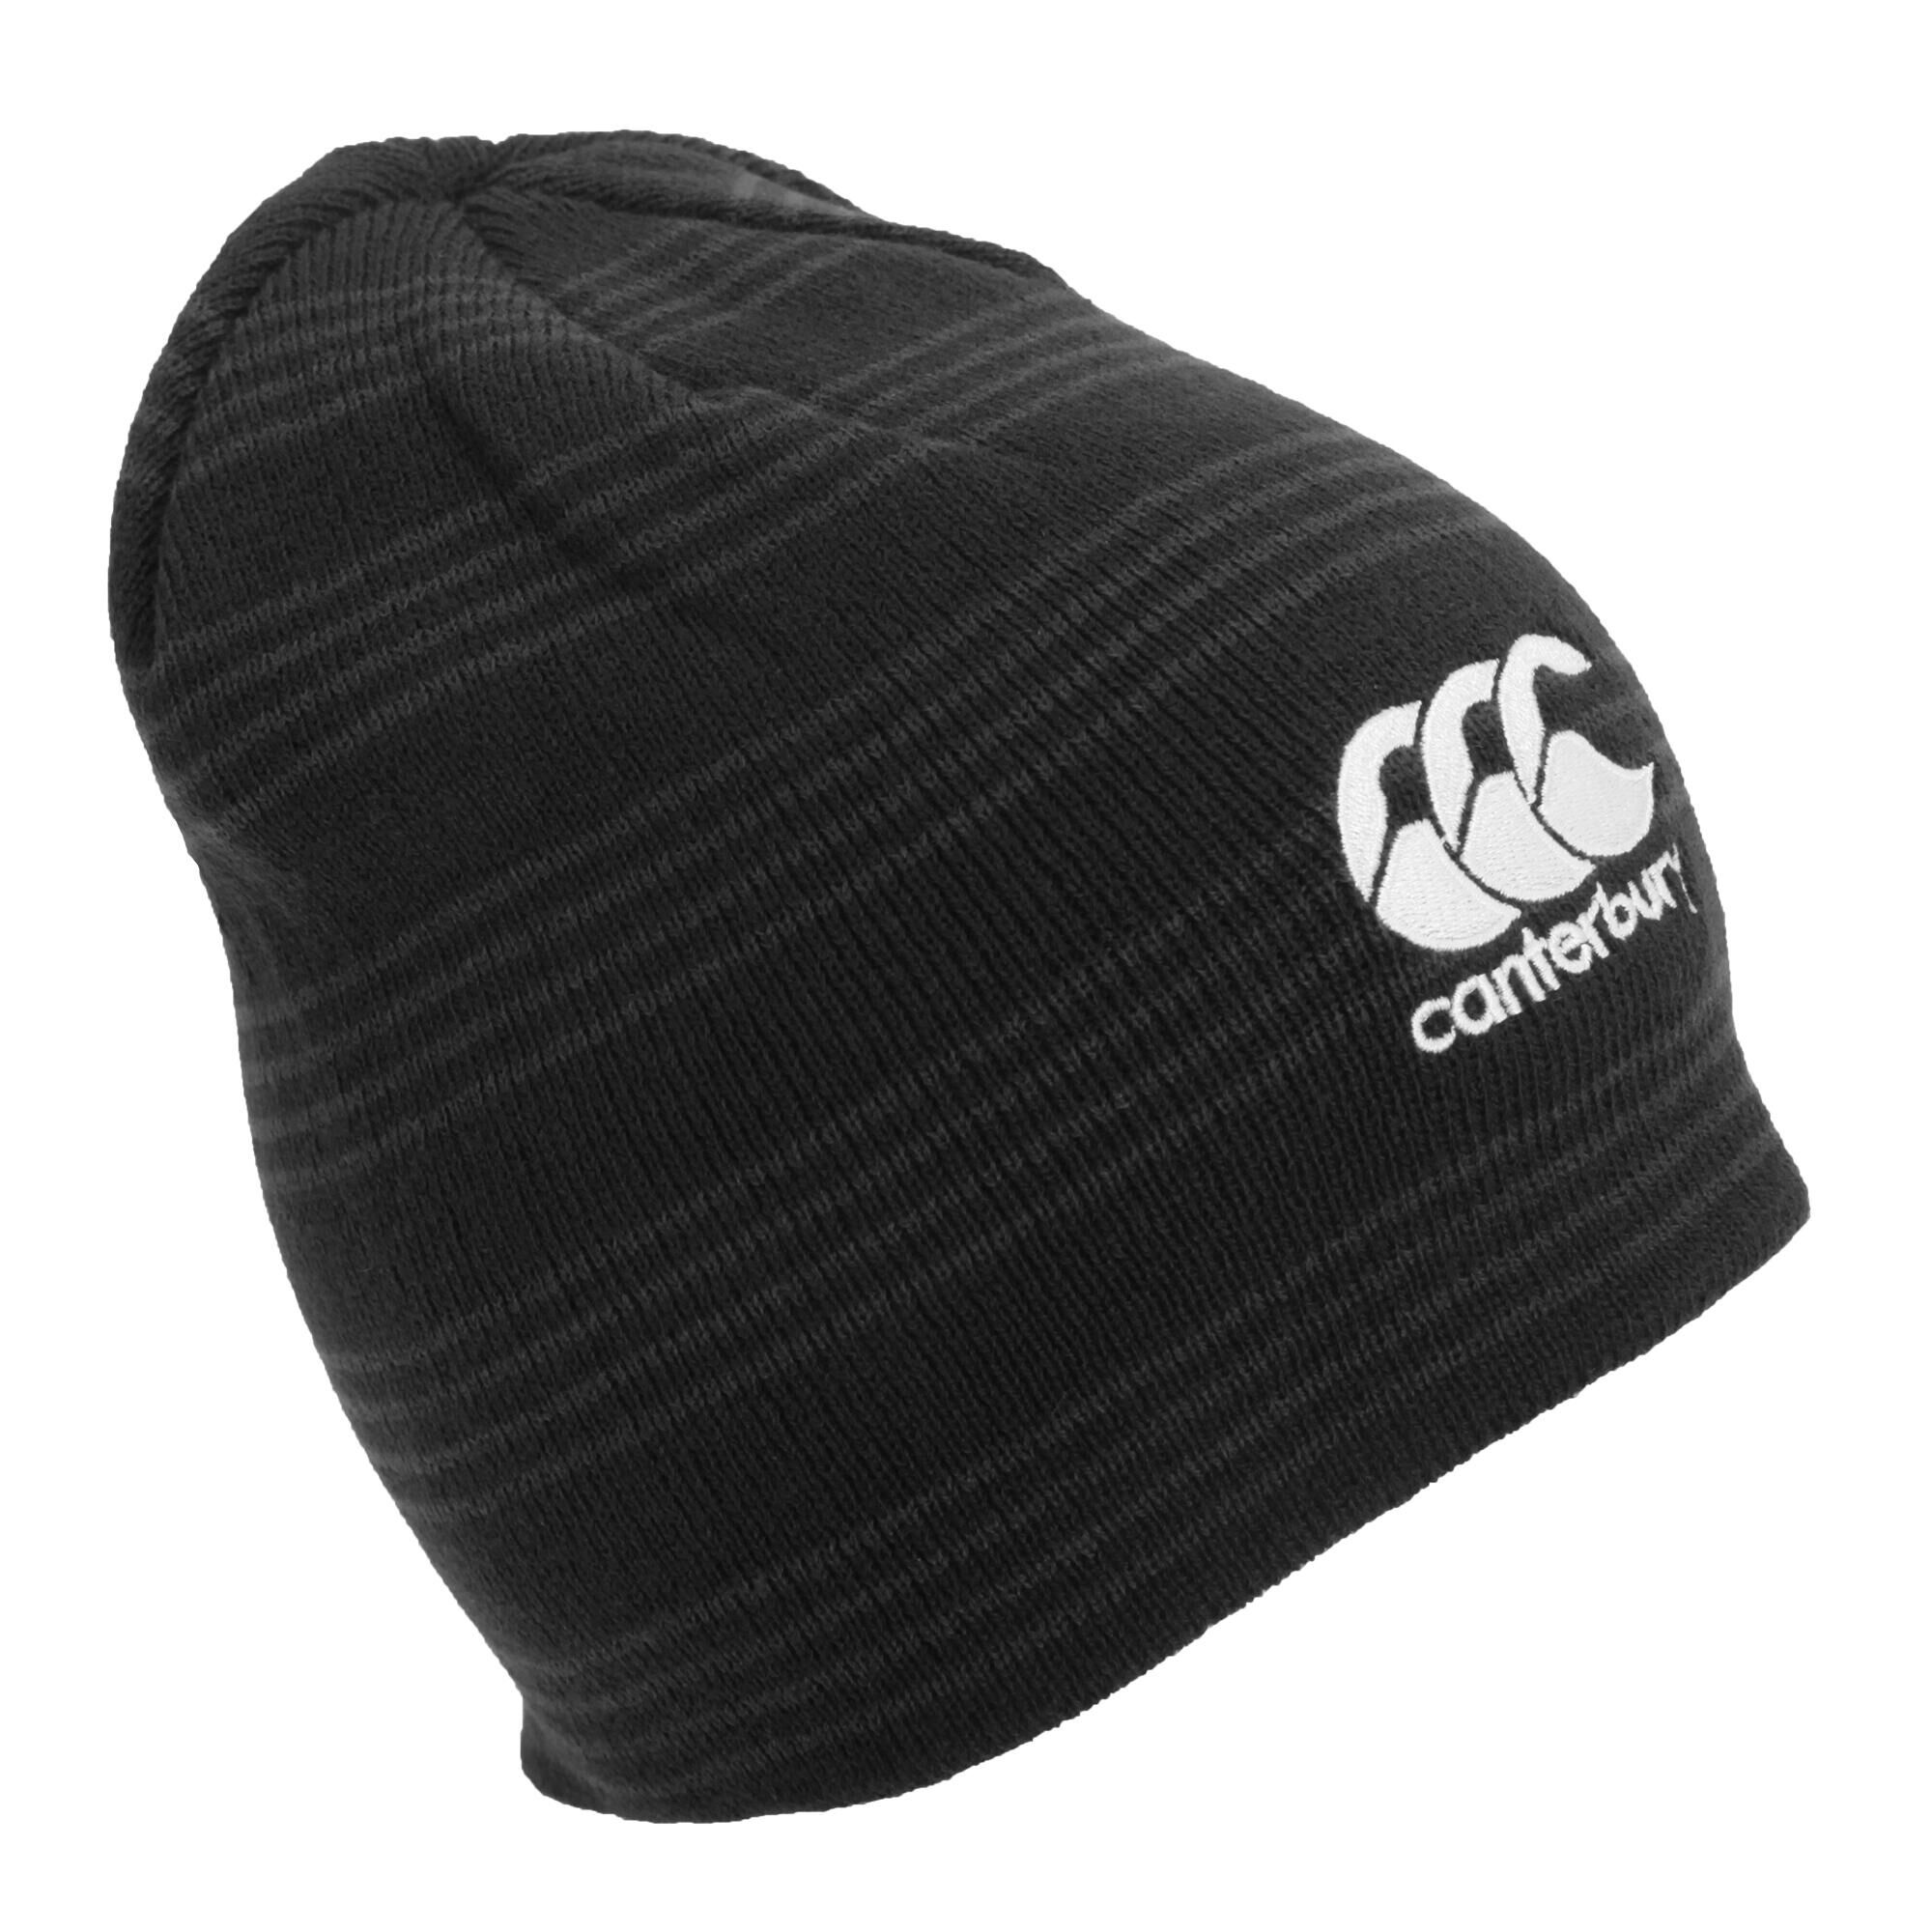 CANTERBURY Team Mens Winter Beanie Hat (Black/White)